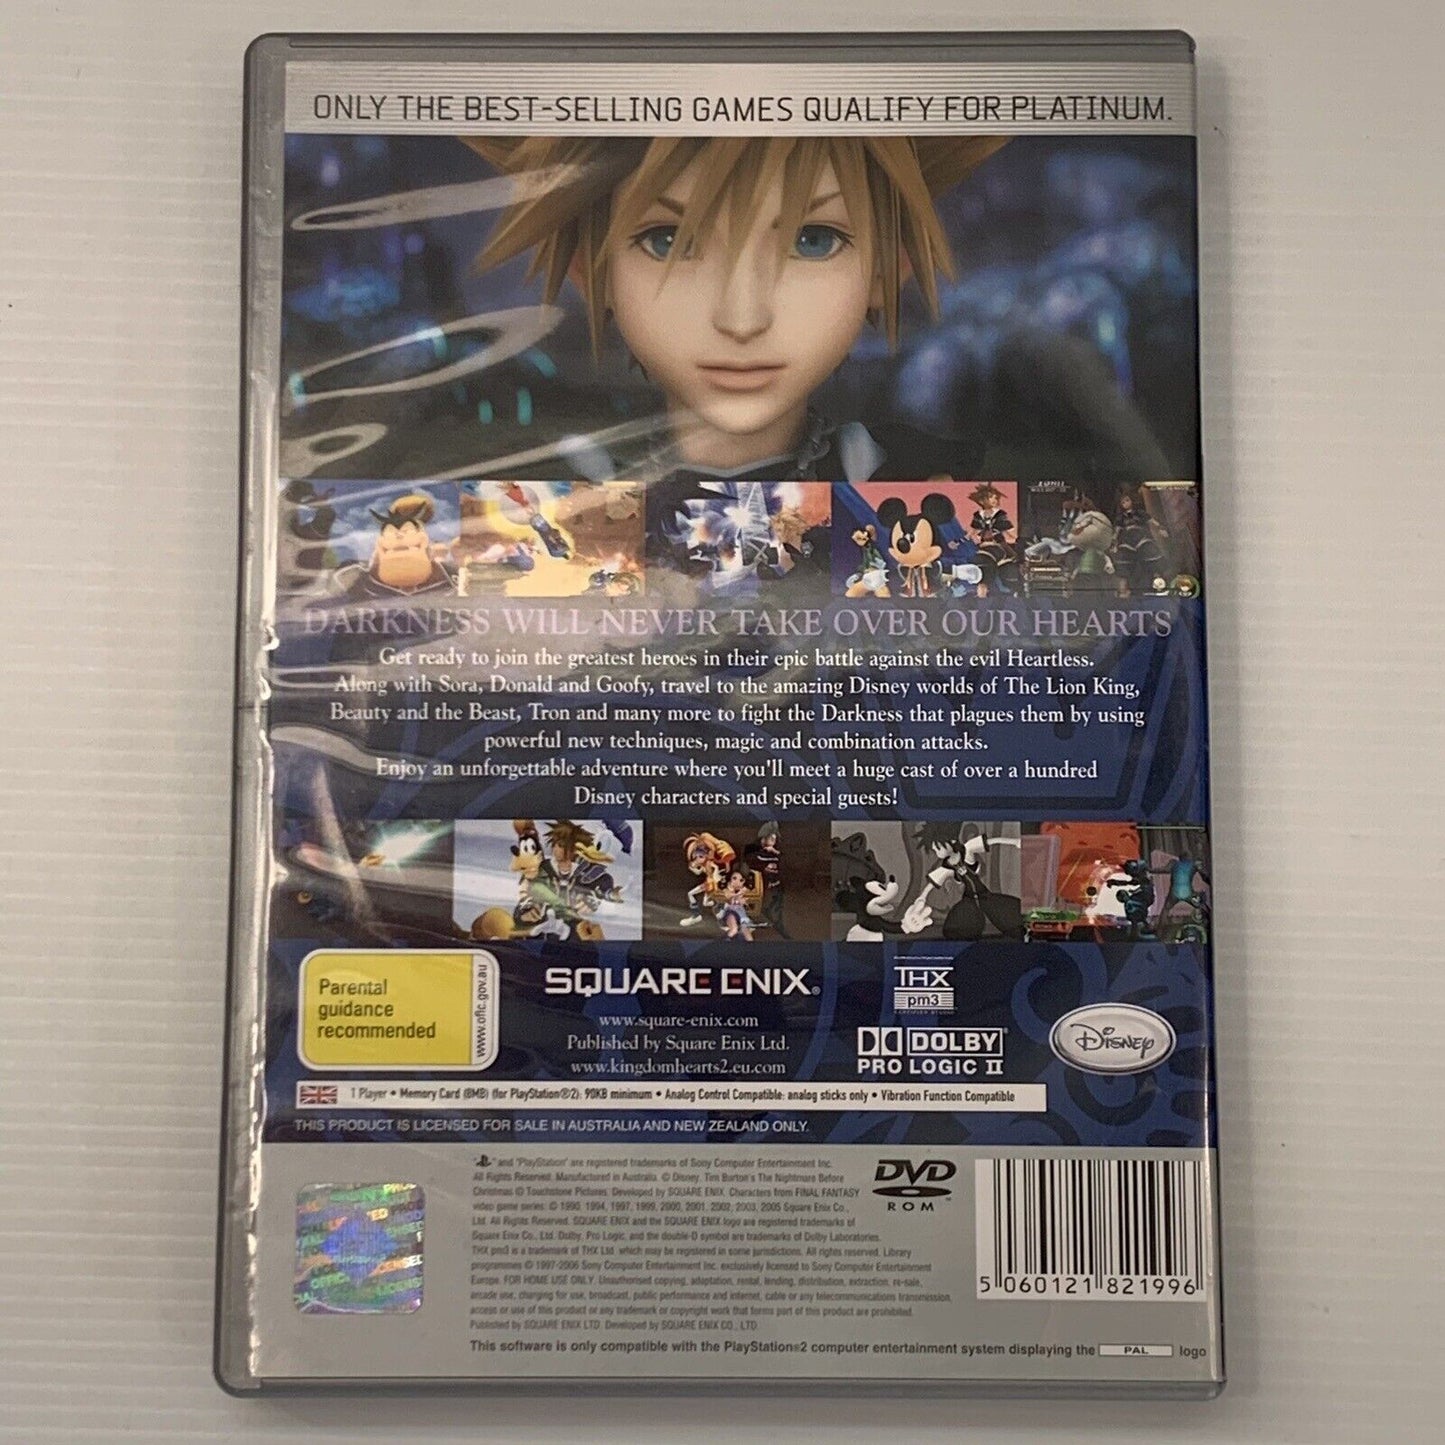 Kingdom Hearts II 2 PlayStation 2 PS2 Game Platinum